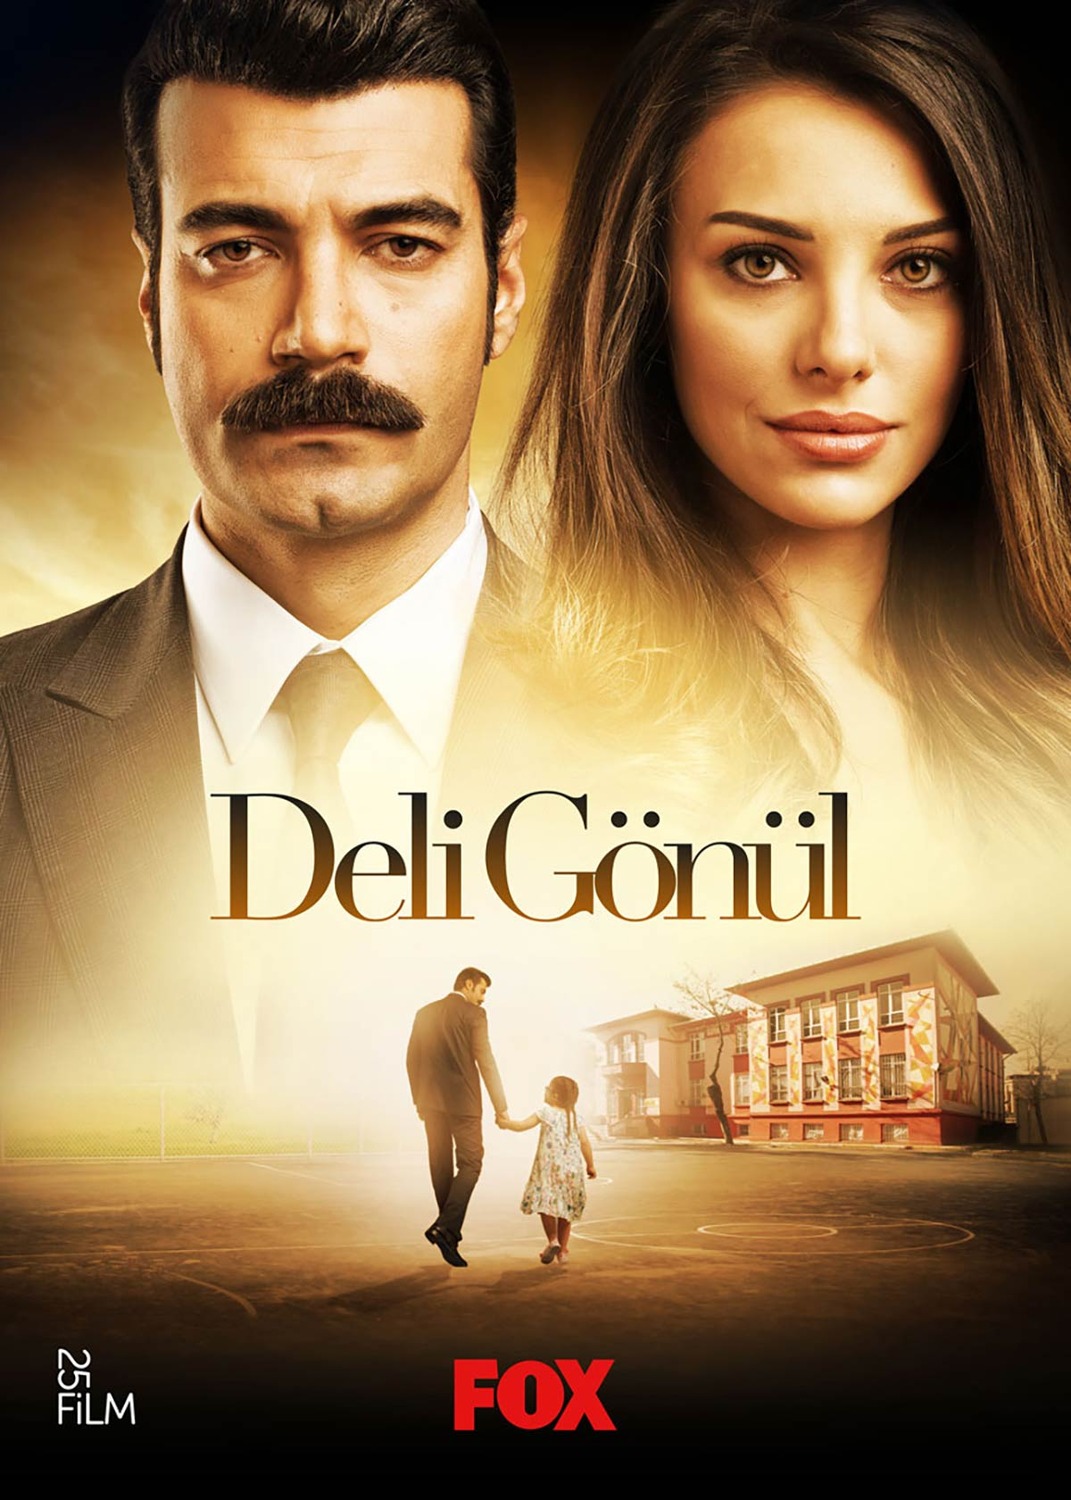 Extra Large TV Poster Image for Deli gönül 